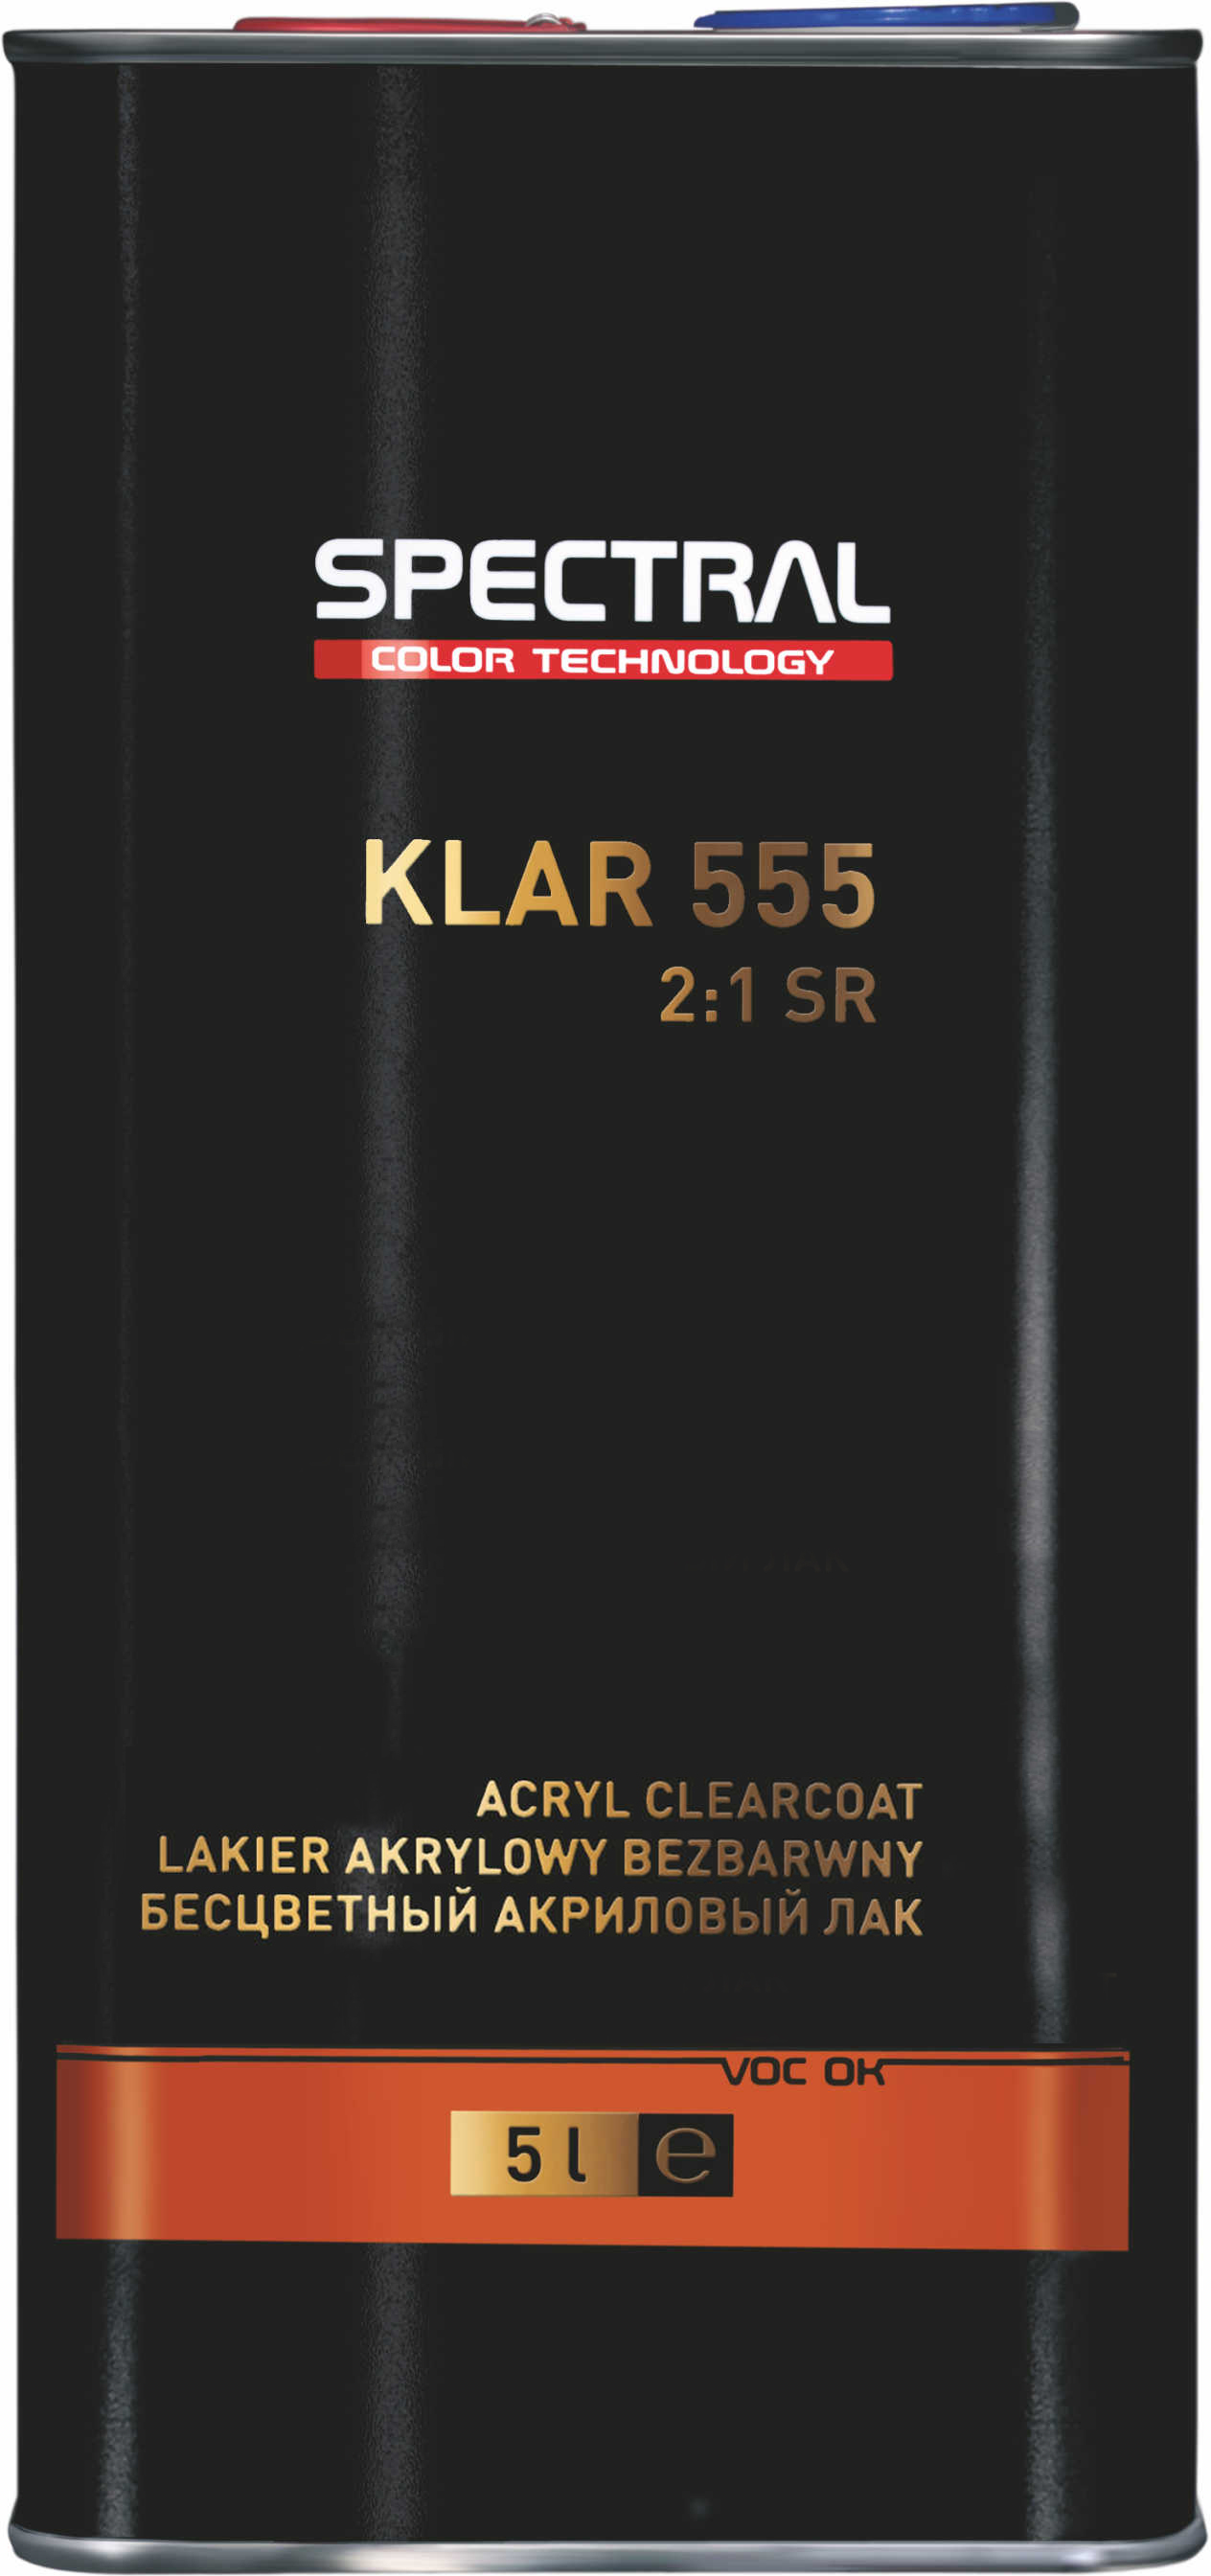 KLAR 555 - Barniz de dos componentes con efecto anti-arañazos (SR) reforzado